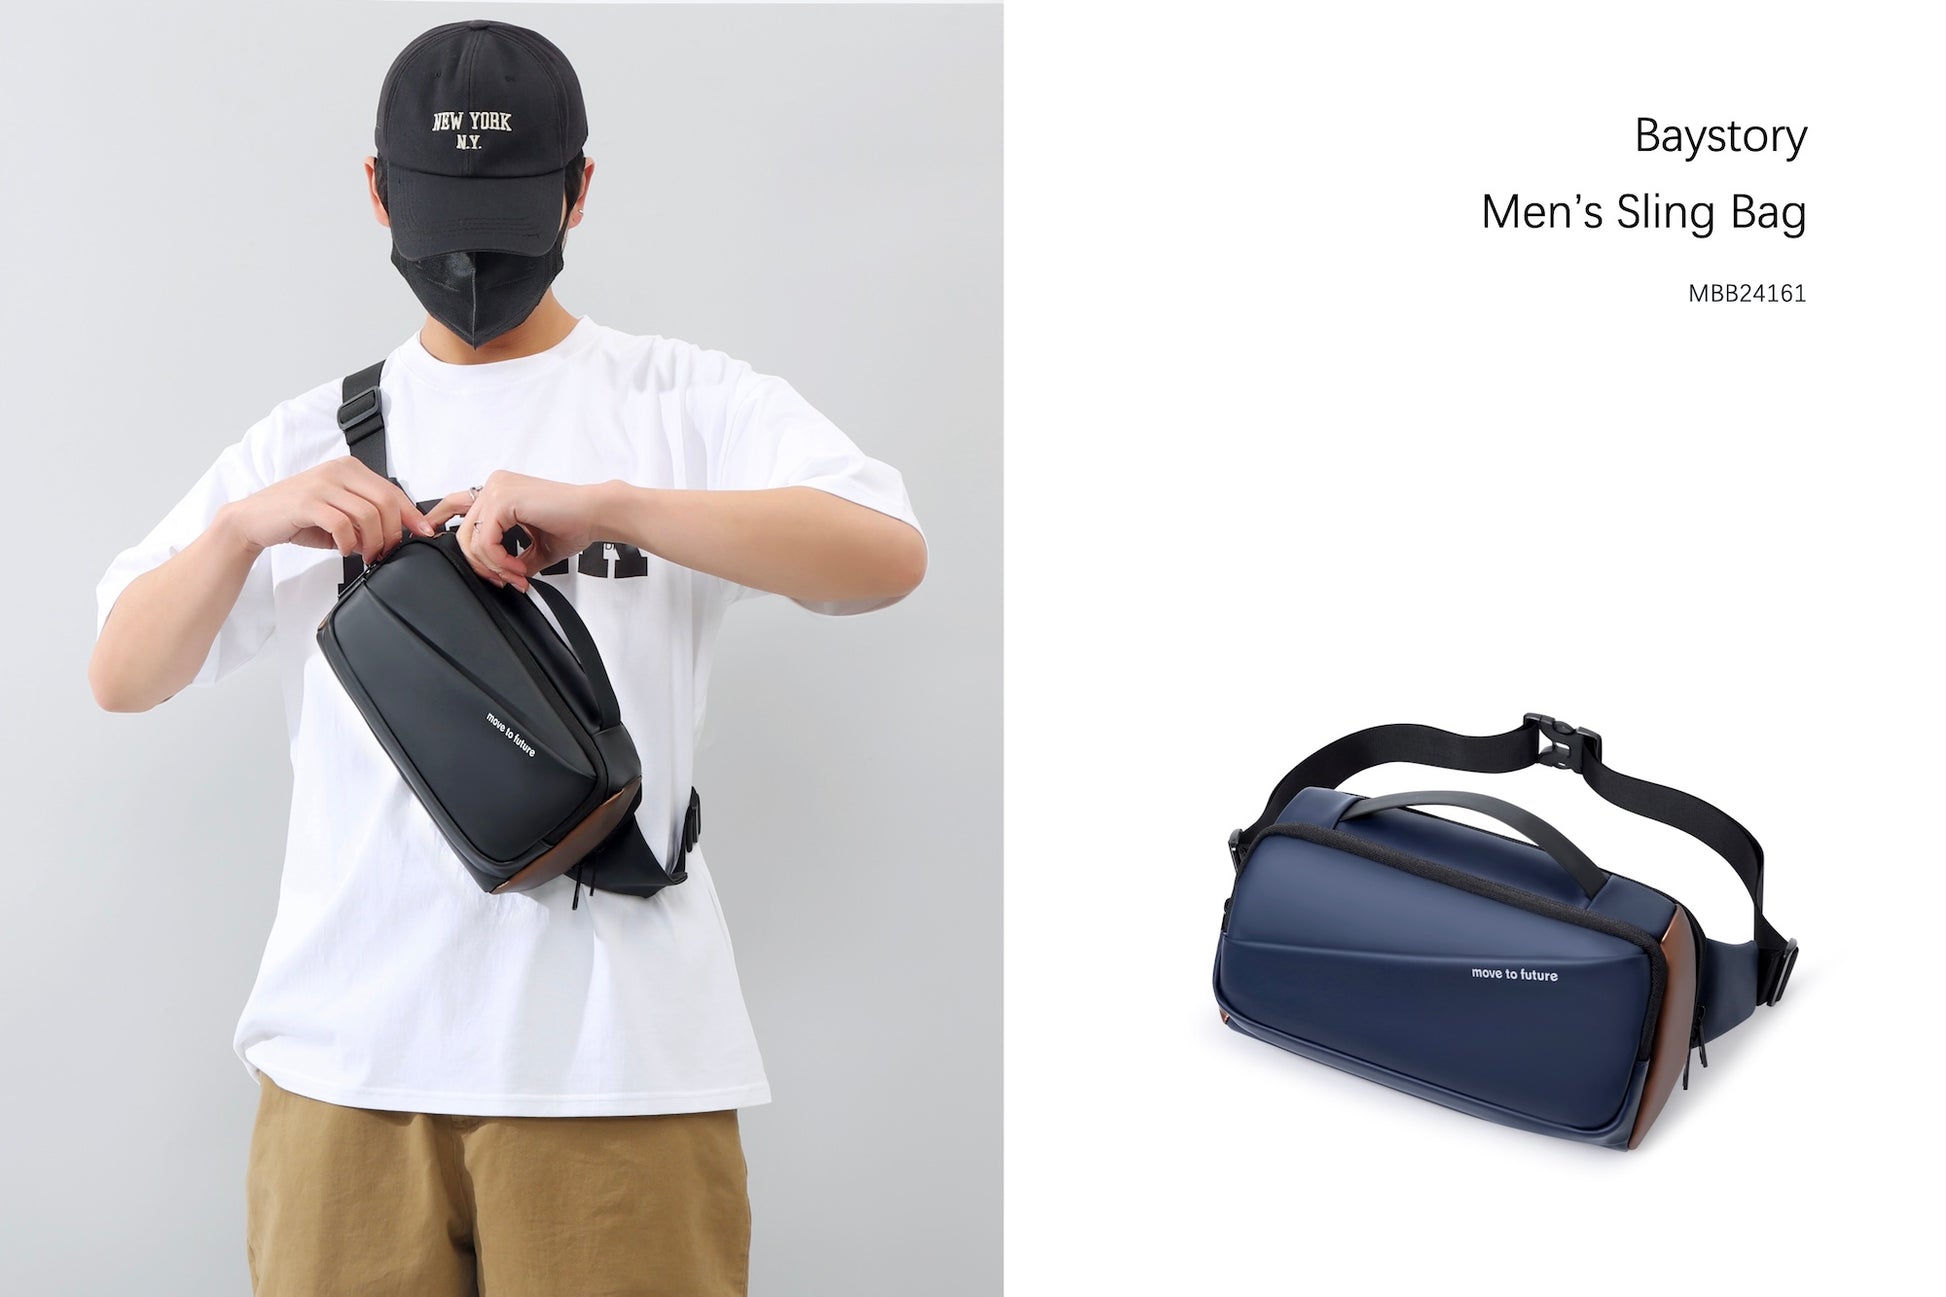 Men's Sling Bag MBB24161 - Baystory